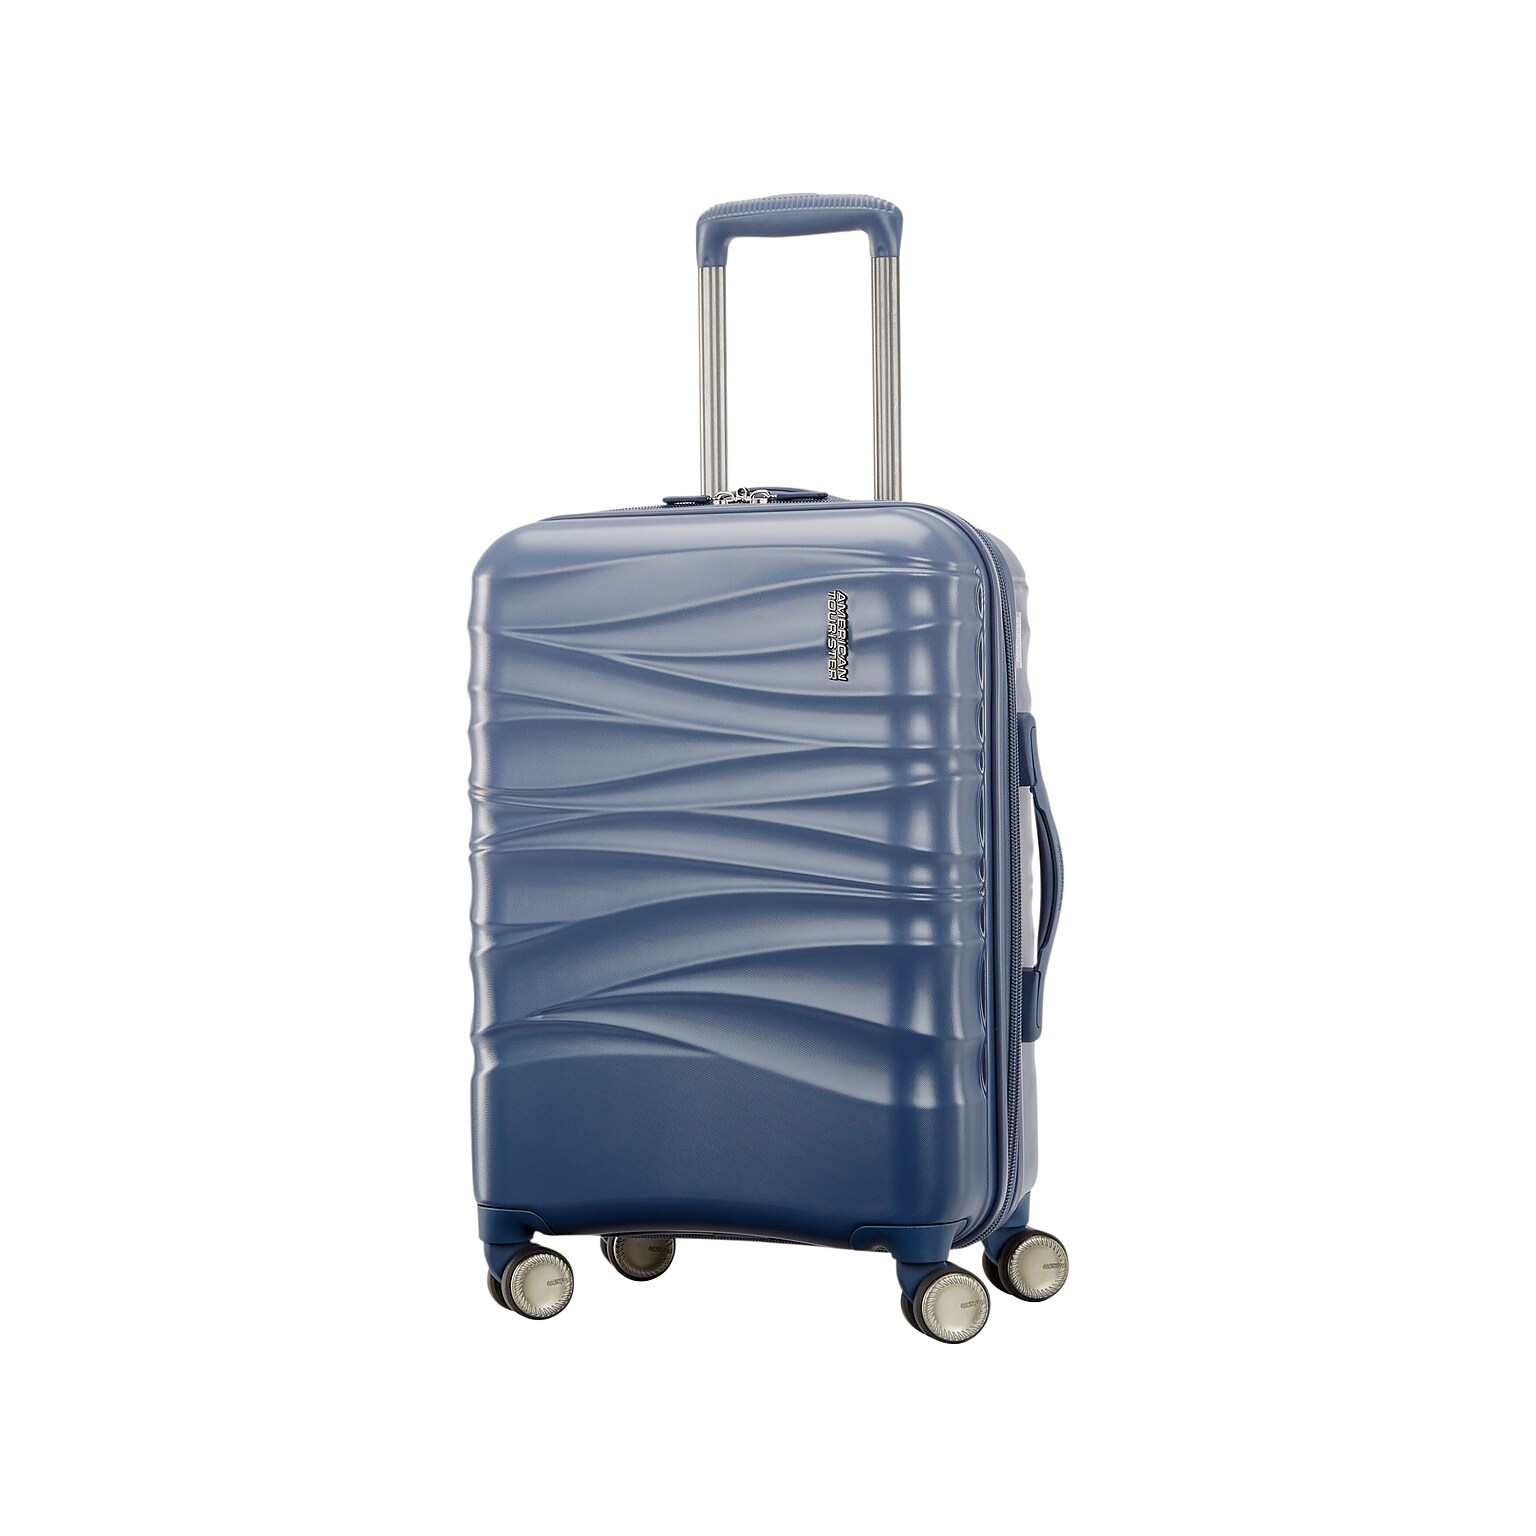 American Tourister Cascade 22 Hardside Carry-On Suitcase, 4-Wheeled Spinner, Slate Blue (143244-E264)